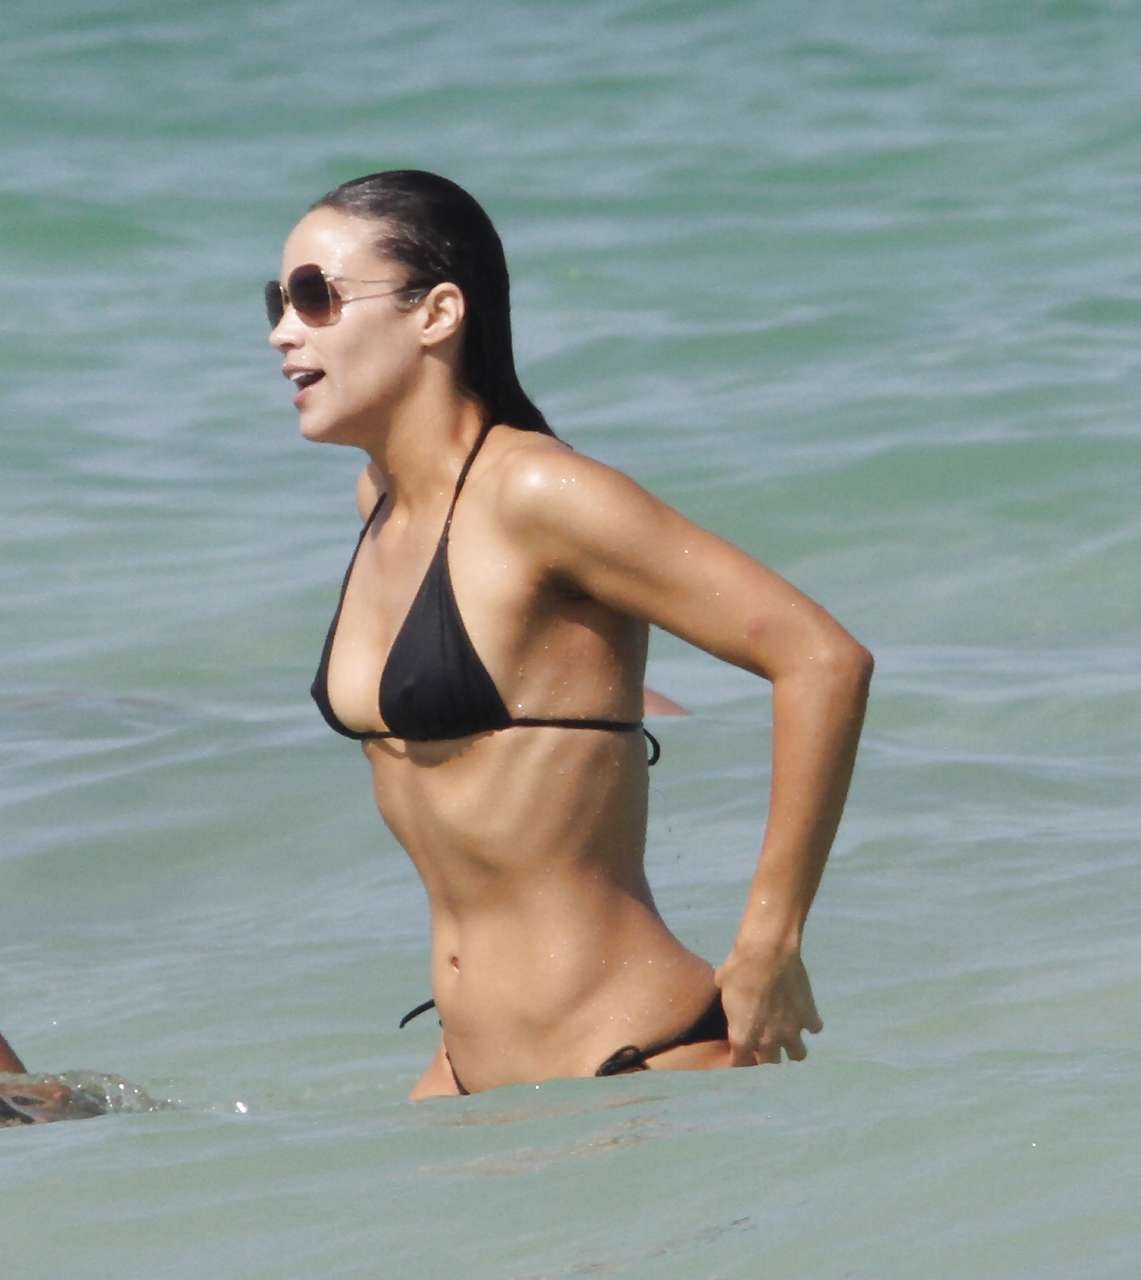 Paula patton muy sexy en bikini negro escaso en la playa foto paparazzi
 #75296583